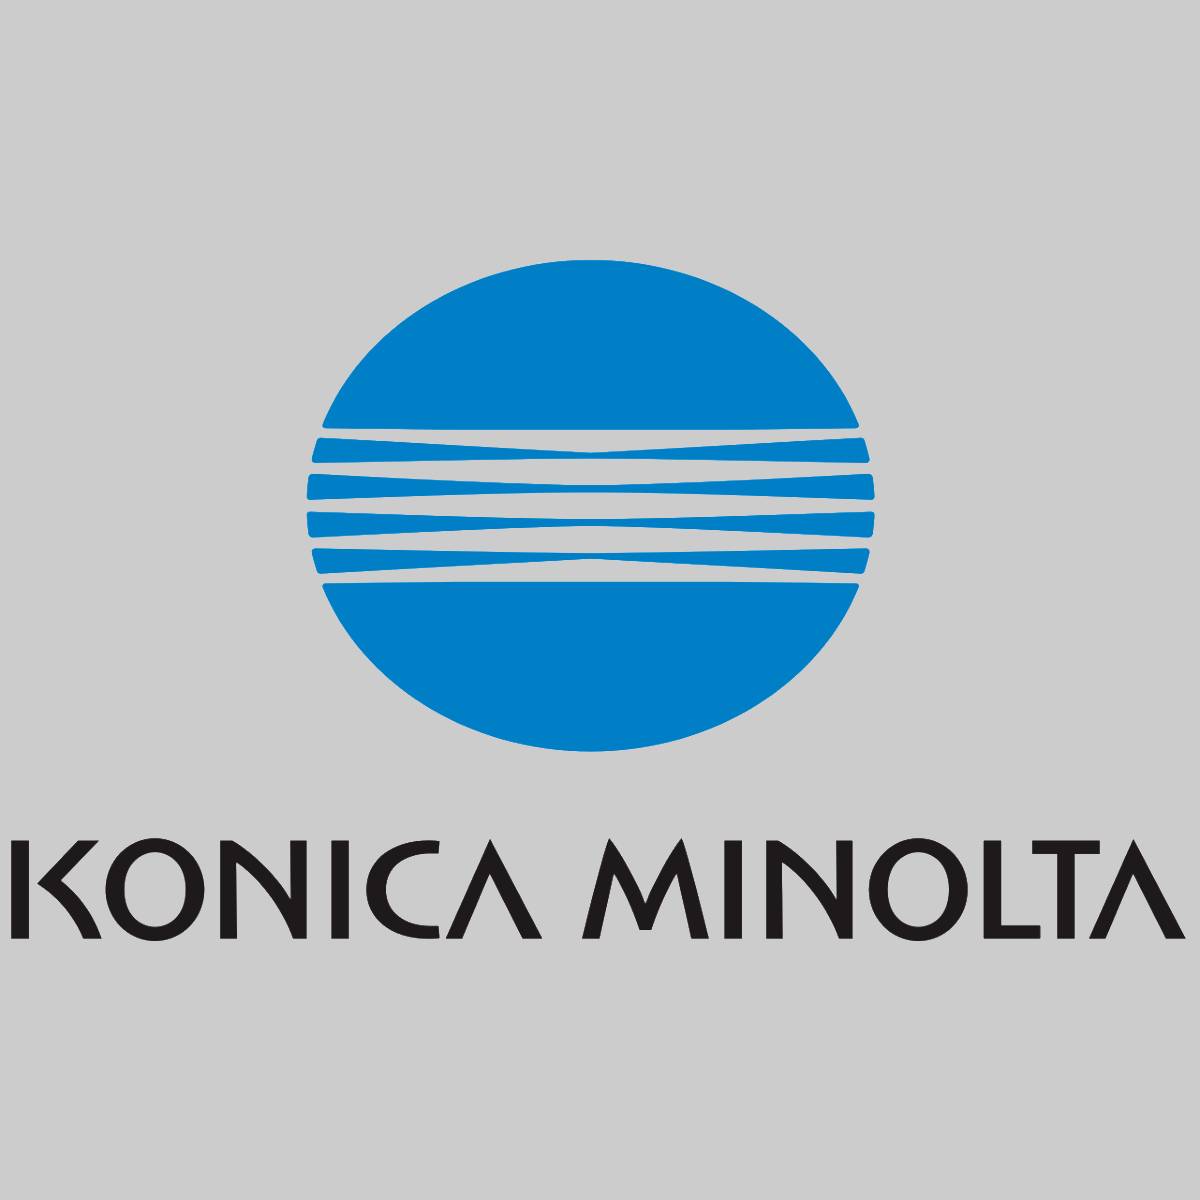 "Unité de charge de tambour d'origine Konica Minolta 1154-0328-01 NEU OVP